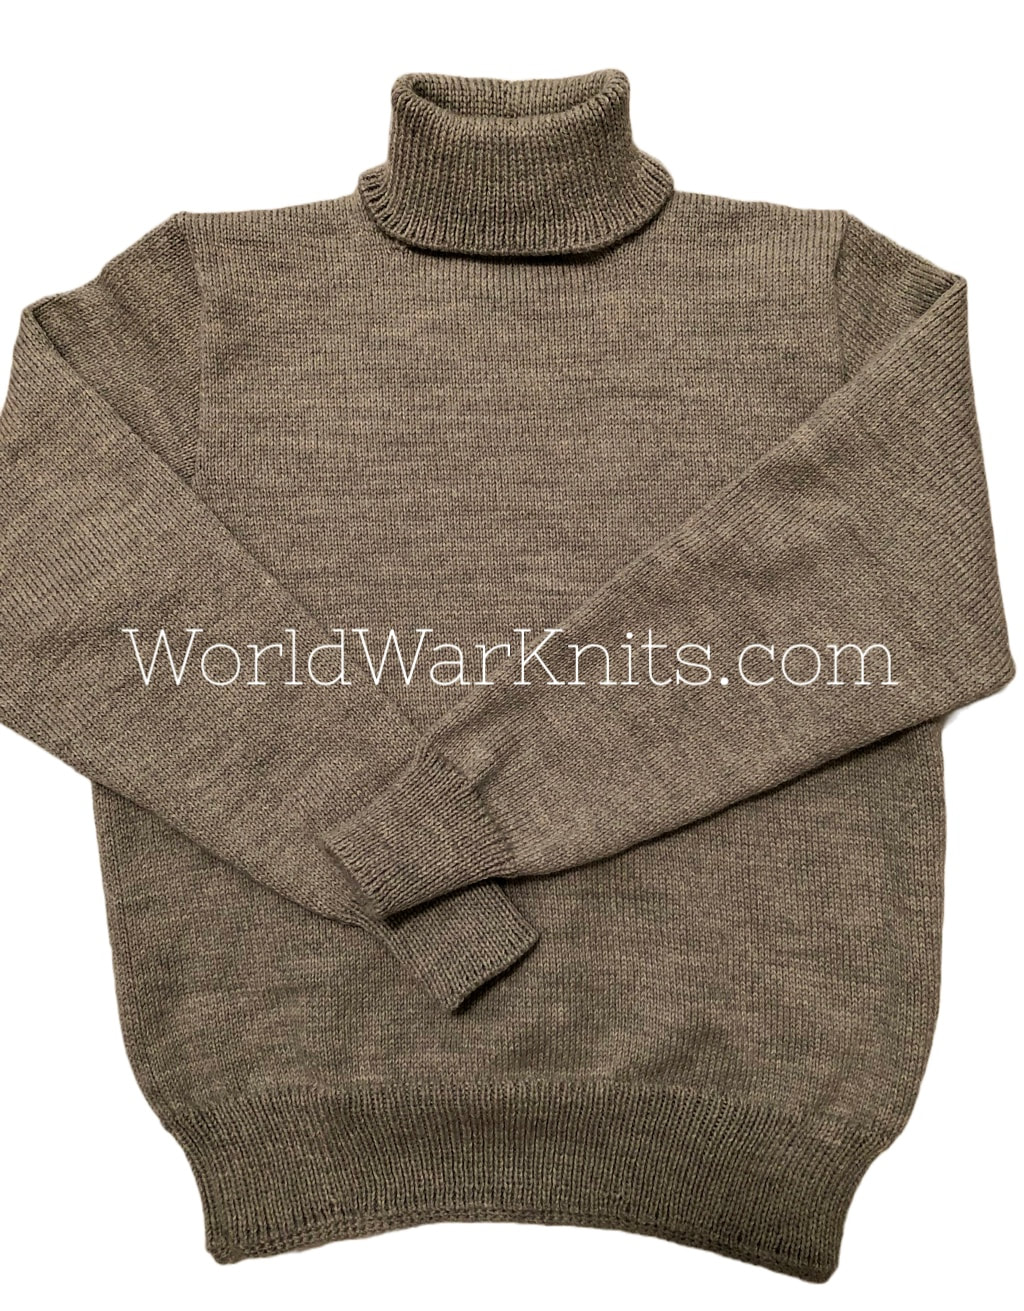 Knitted WWII WW2 Turtleneck Sweater 